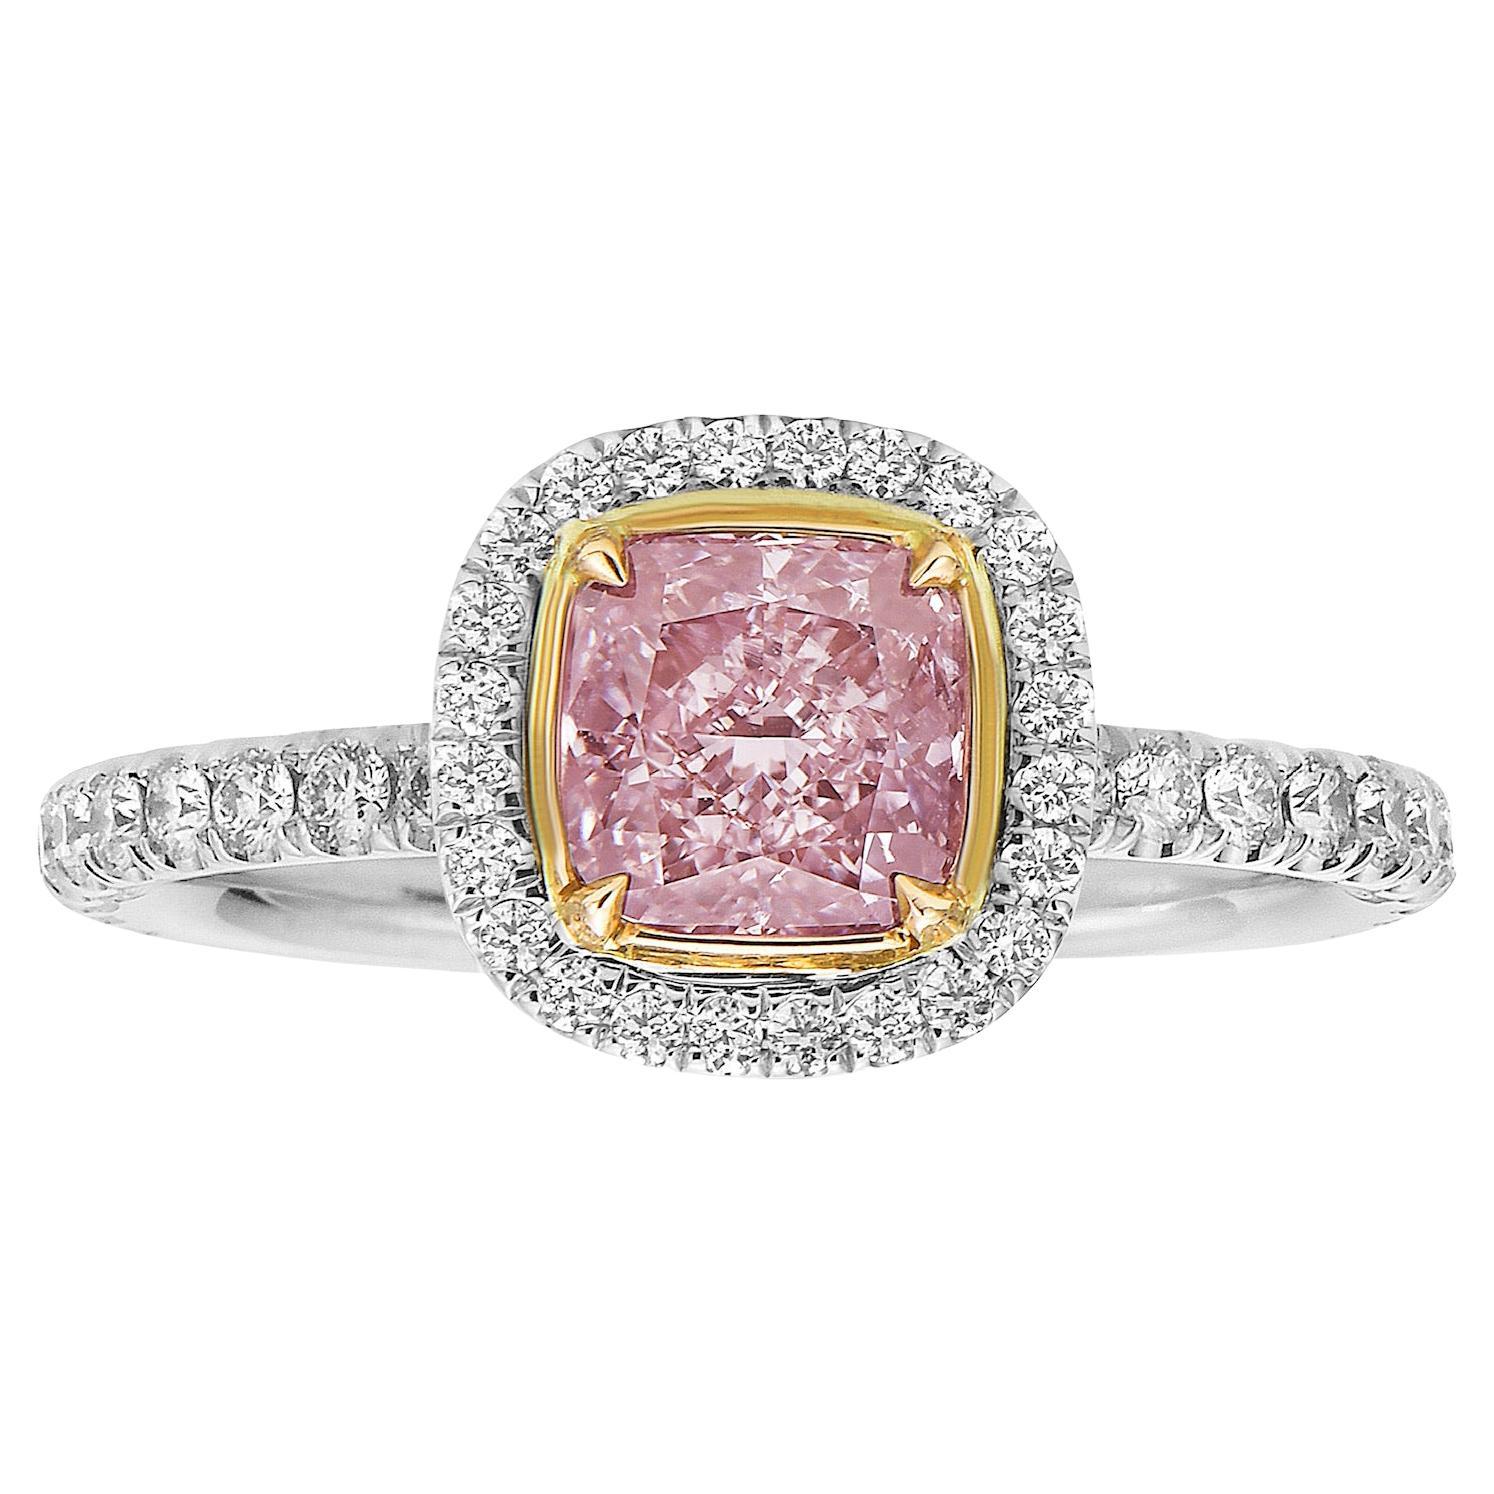 1 Carat GIA Very Light Pink Cushion Cut Diamond Ring